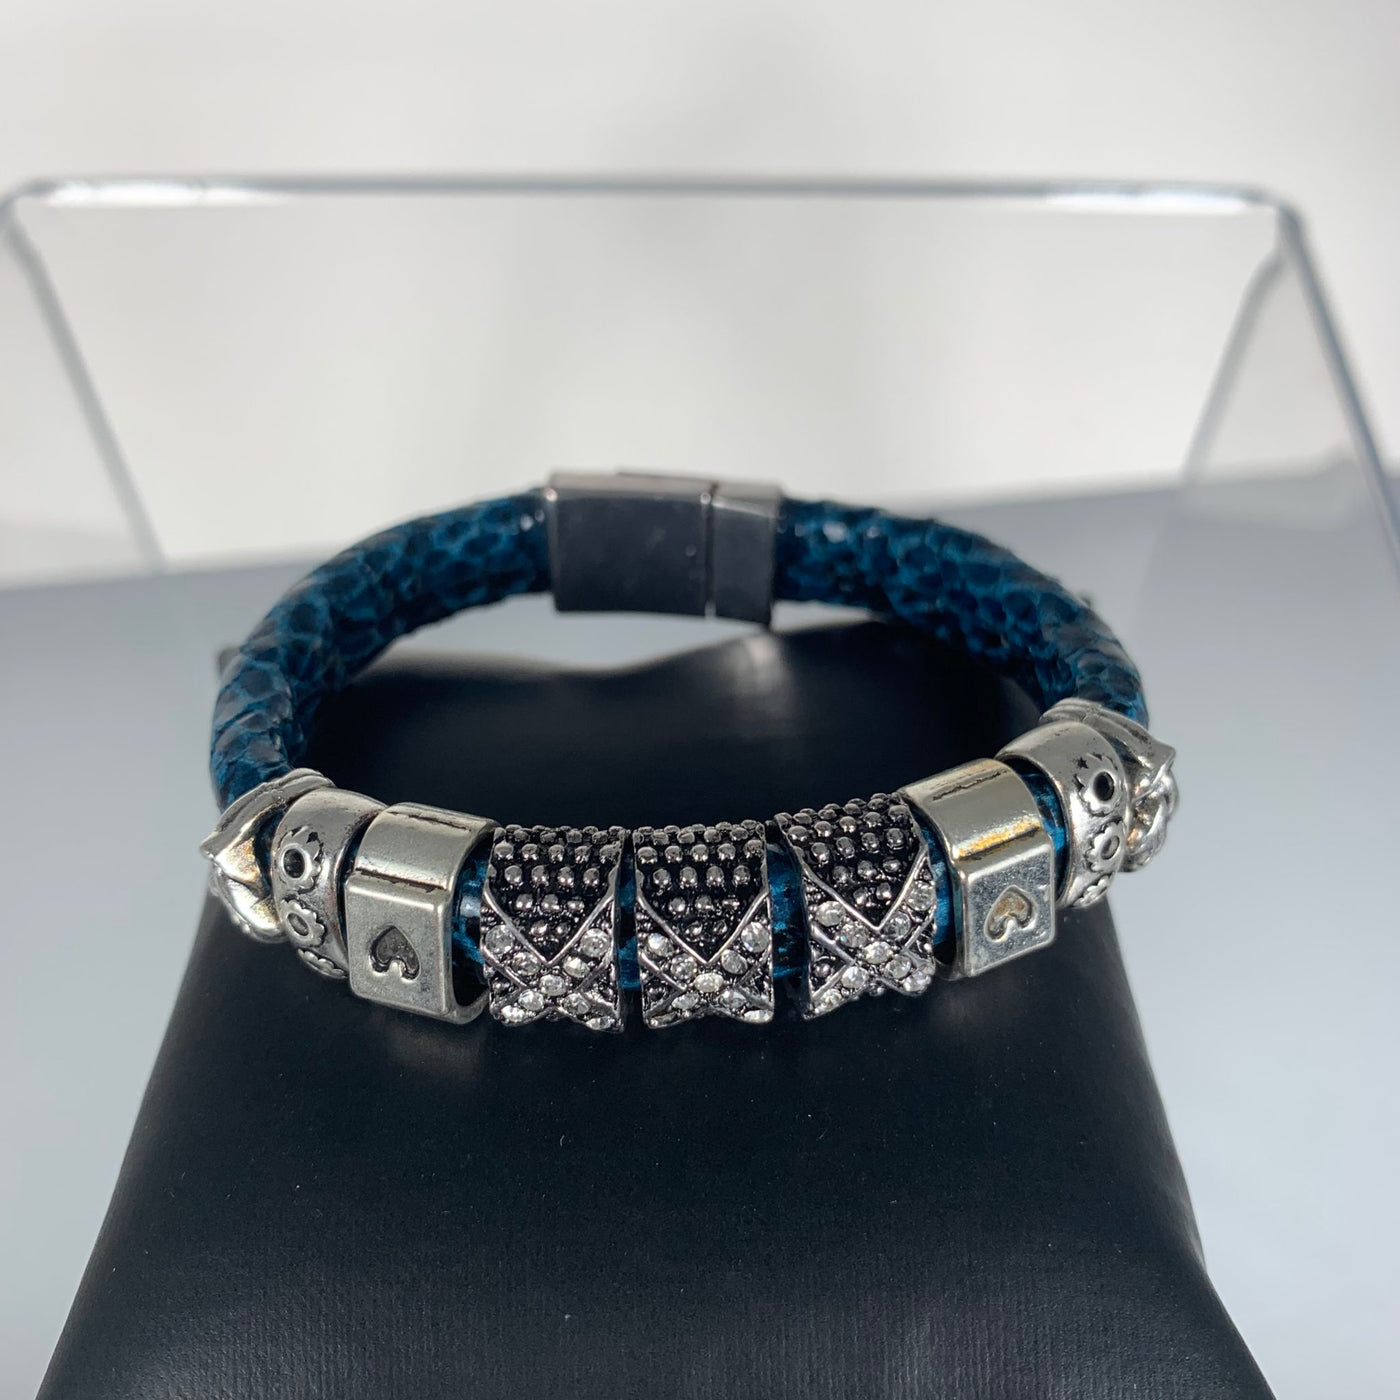 Blue Faux Snake Skin Band Bracelet Featuring SPARKS